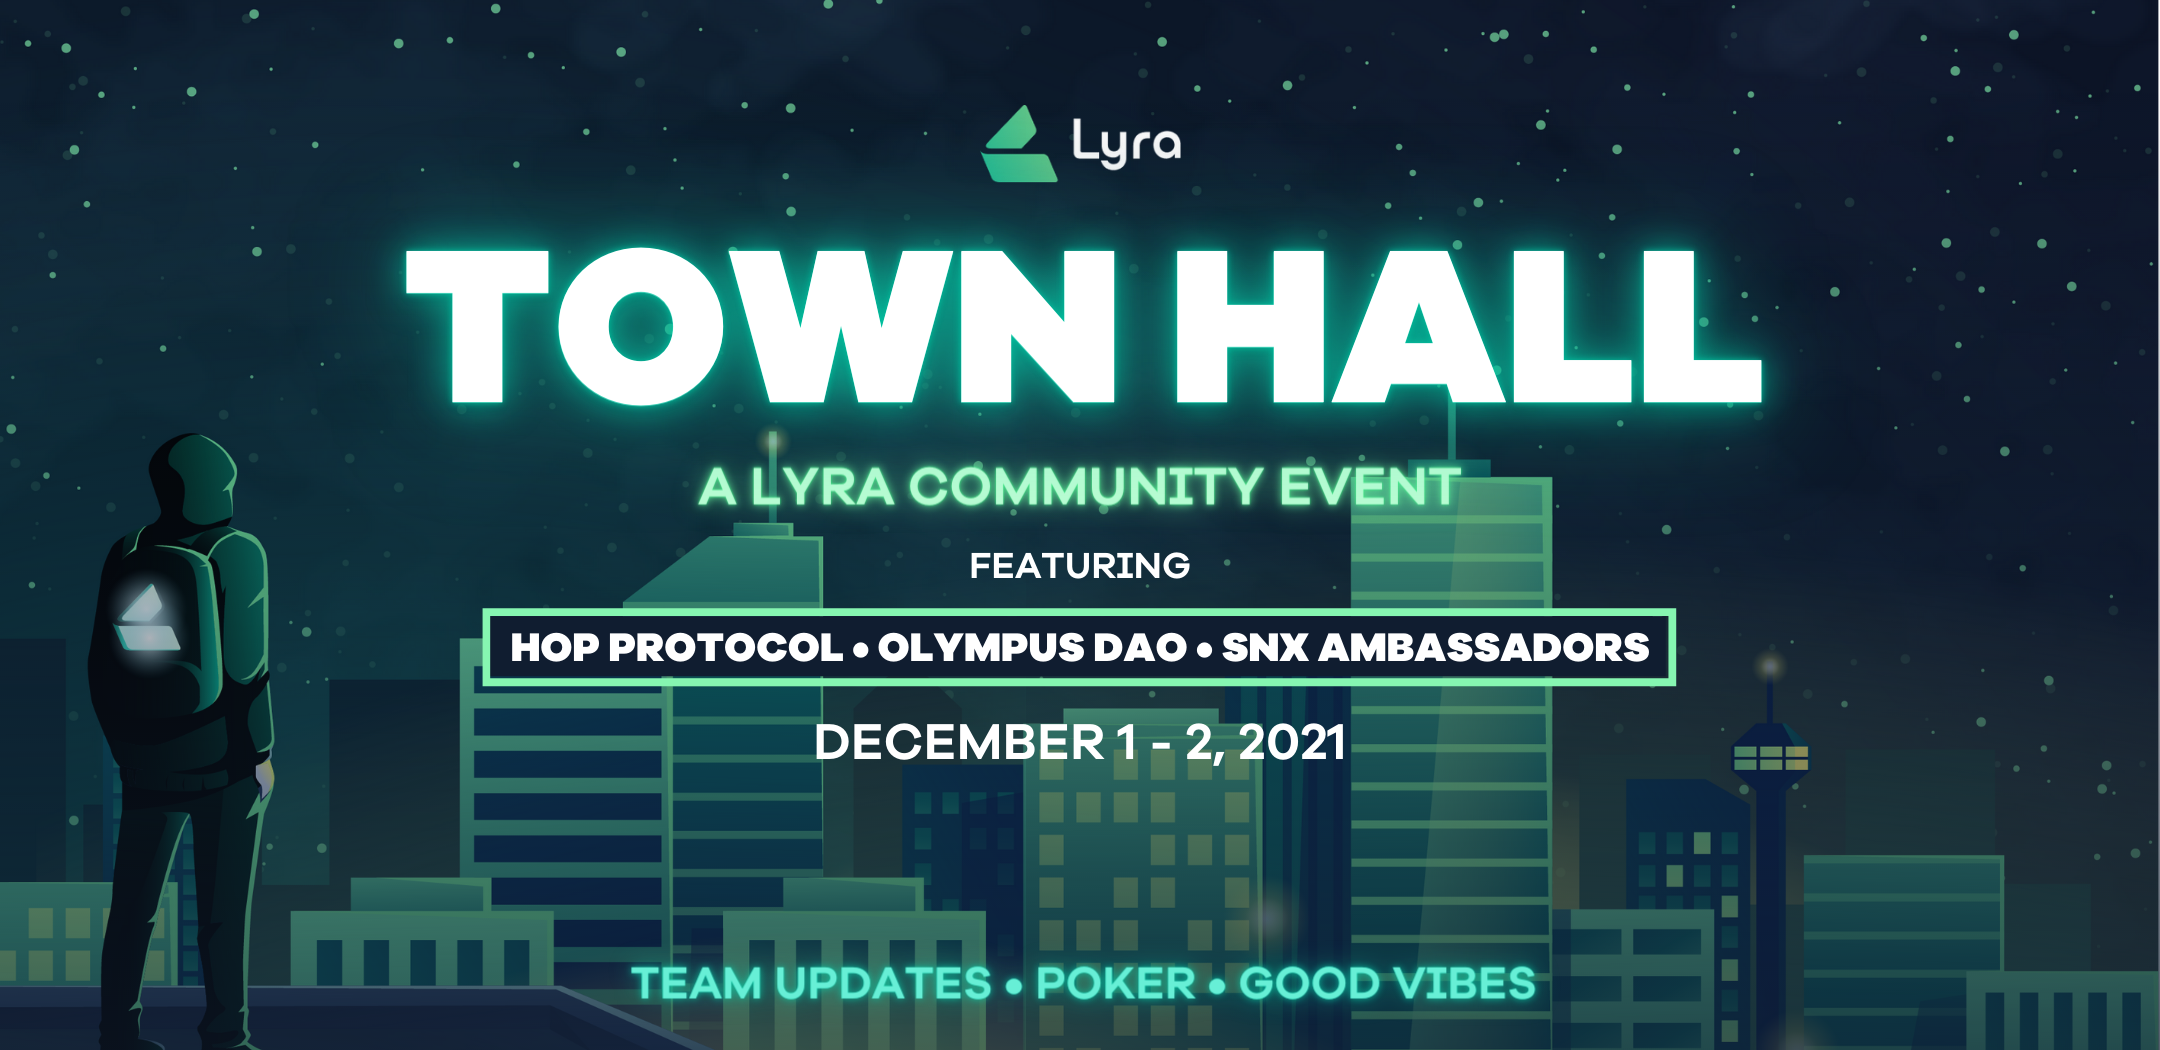 Lyra Town Hall | December 1-2, 2021